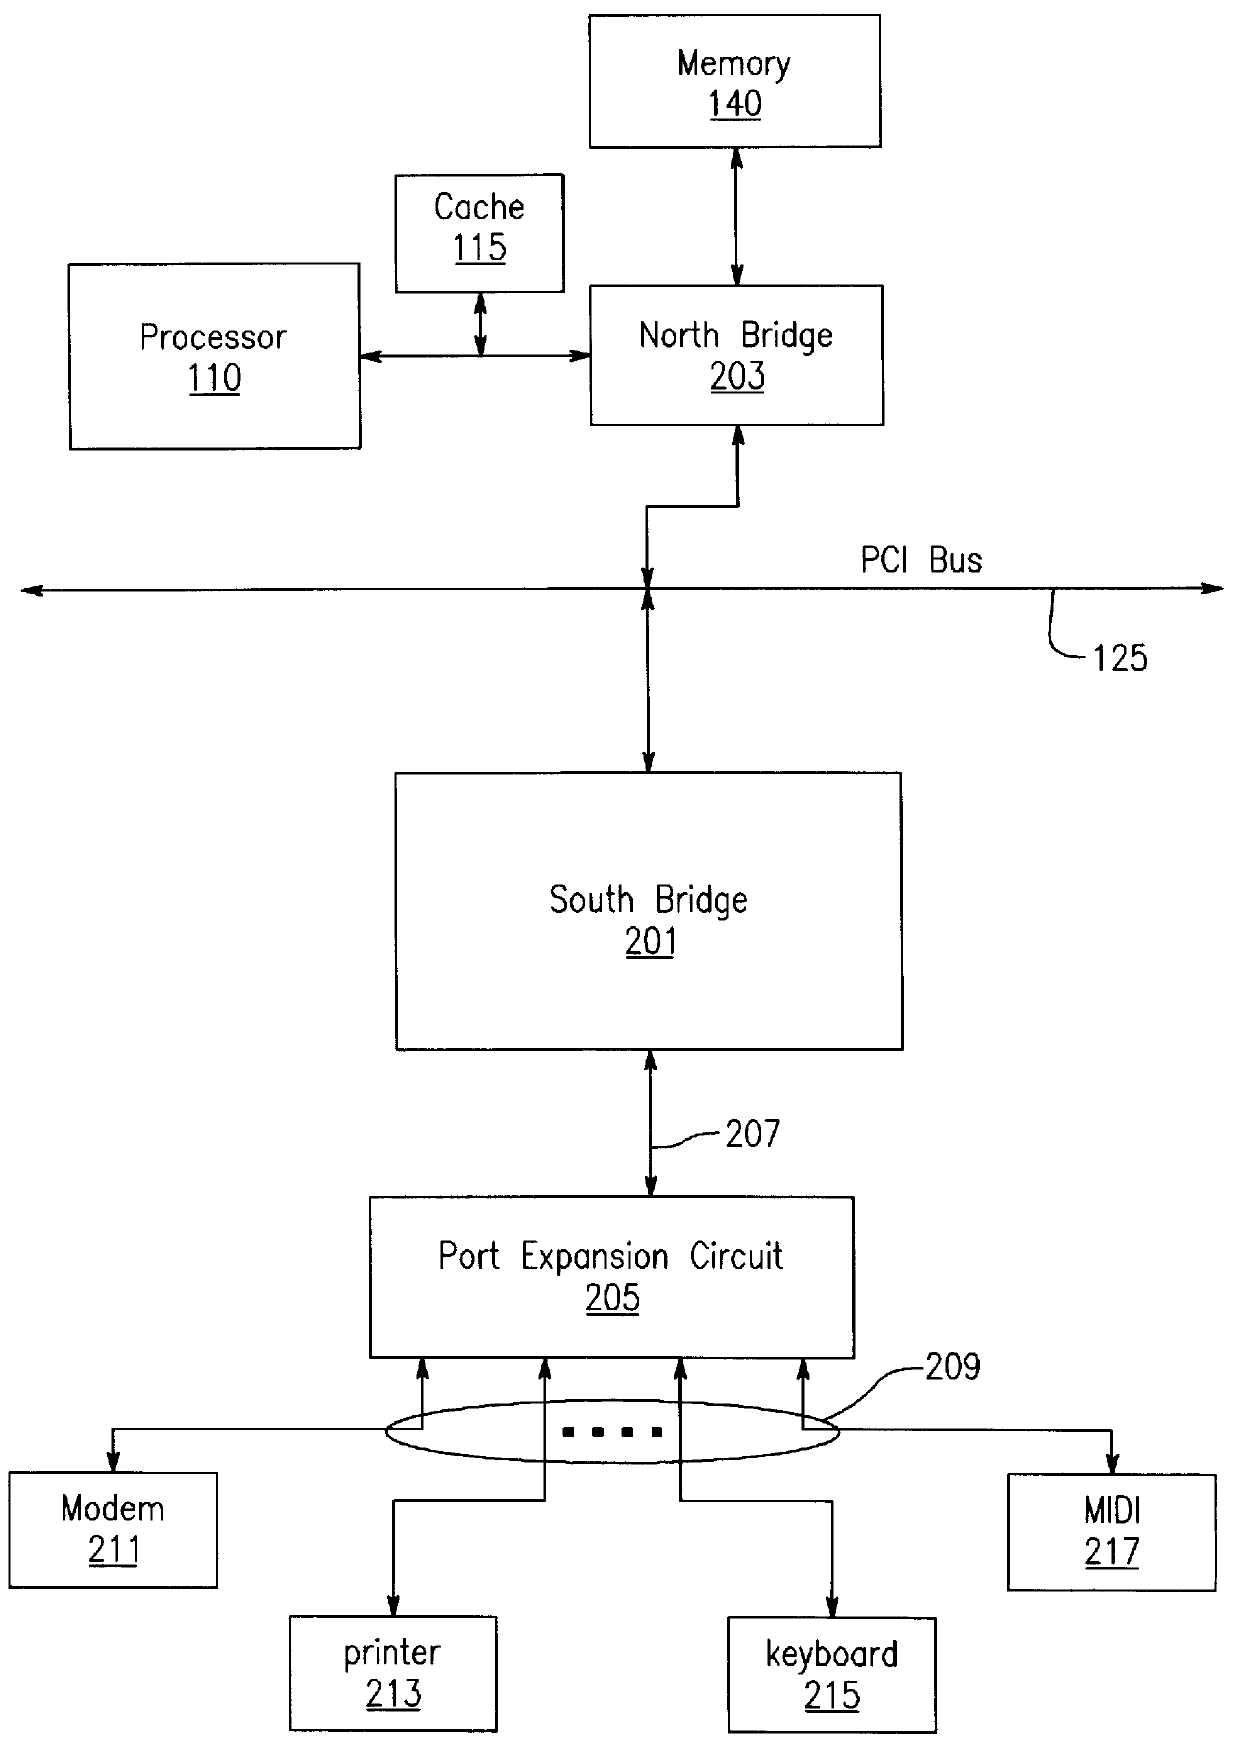 PC core logic chipset comprising a serial register access bus